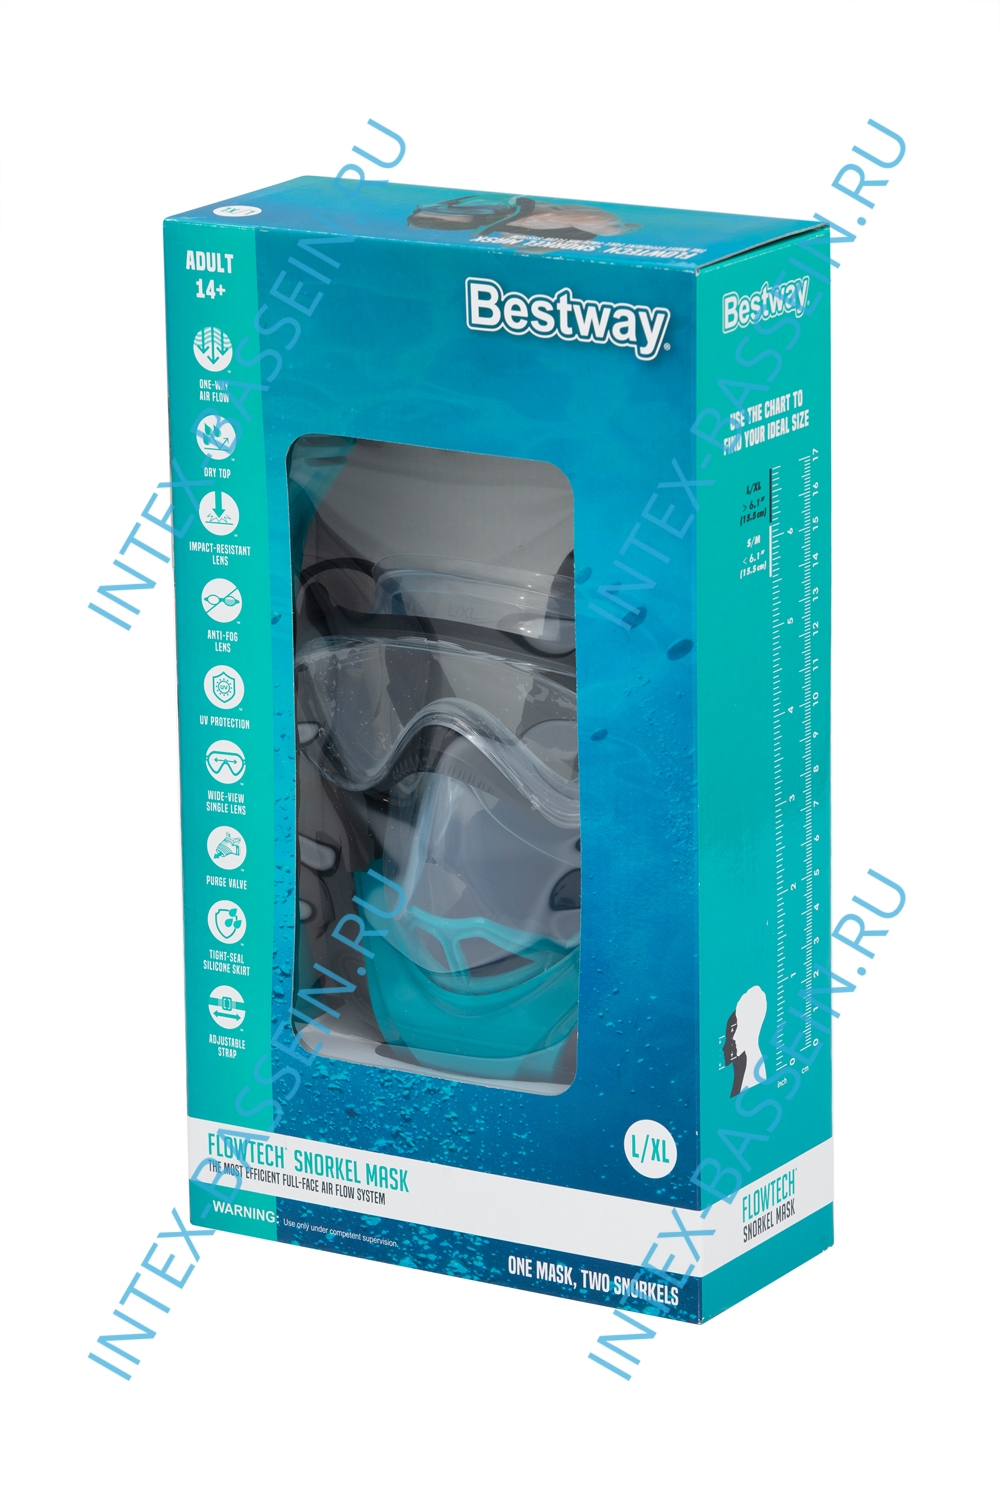 Маска для дайвинга Bestway Flowtech размер XL, артикул 24058